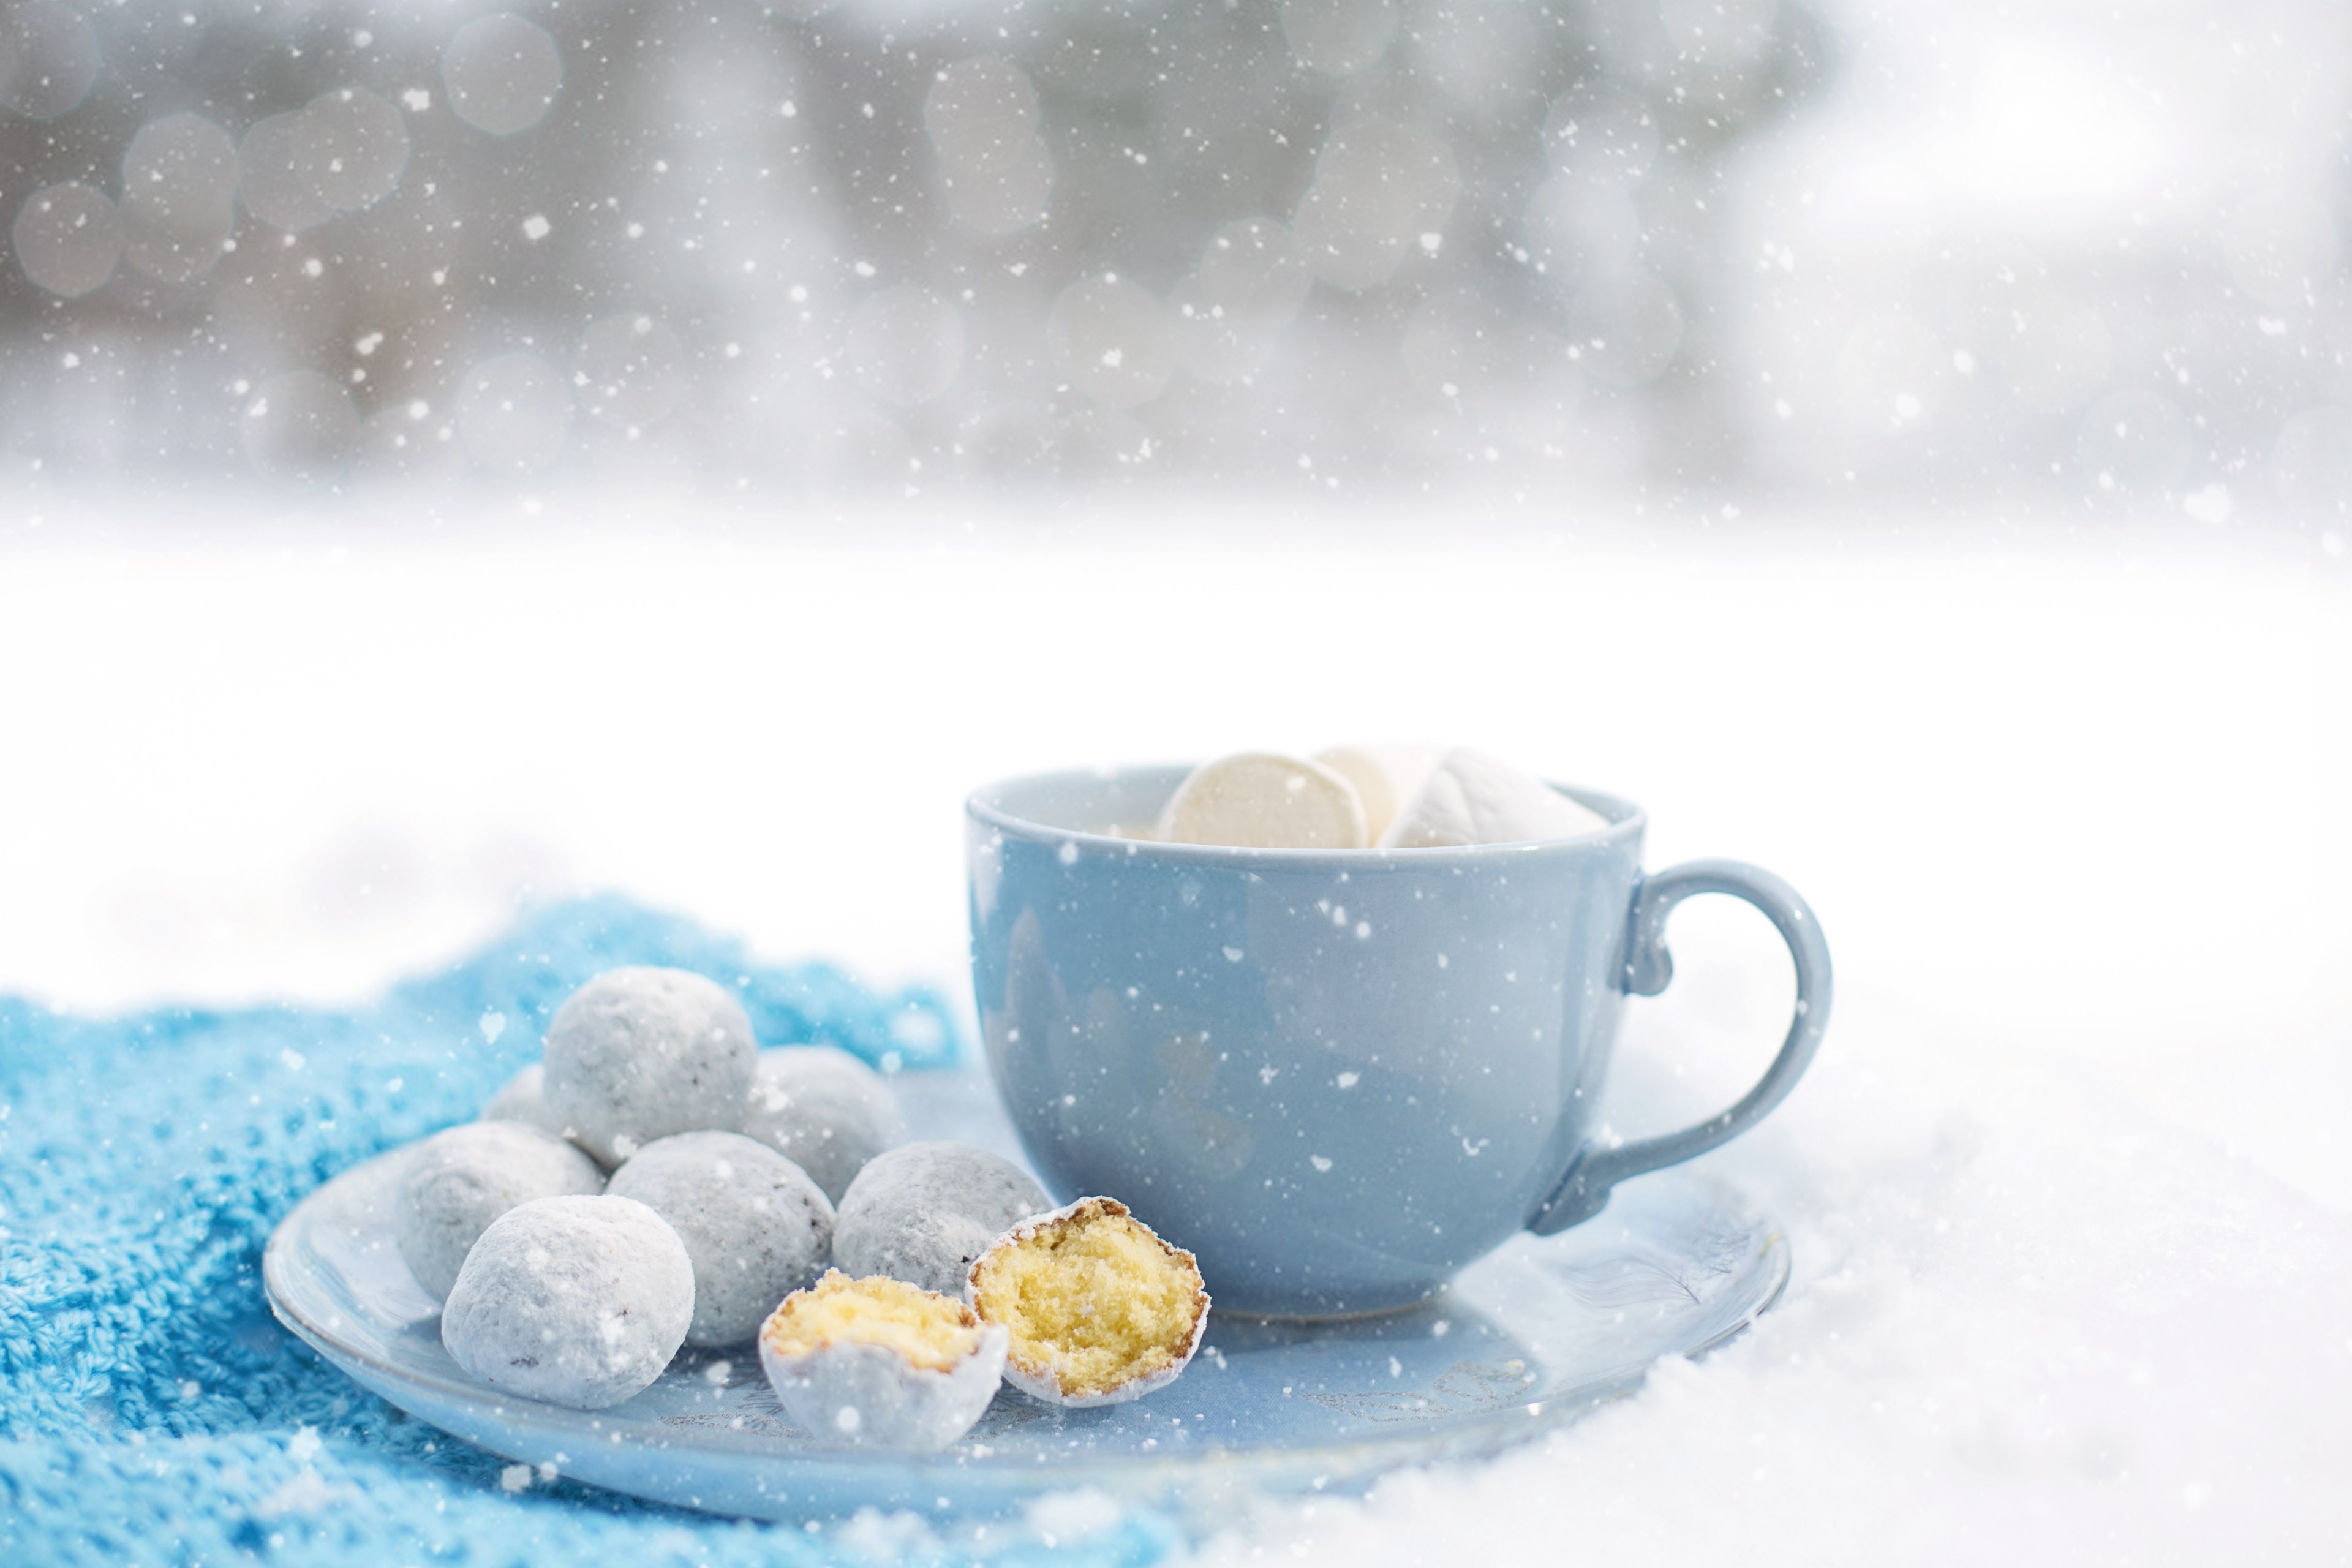 Wallpaper / hot chocolate cozy winter dessert warm snow mug 4k wallpaper